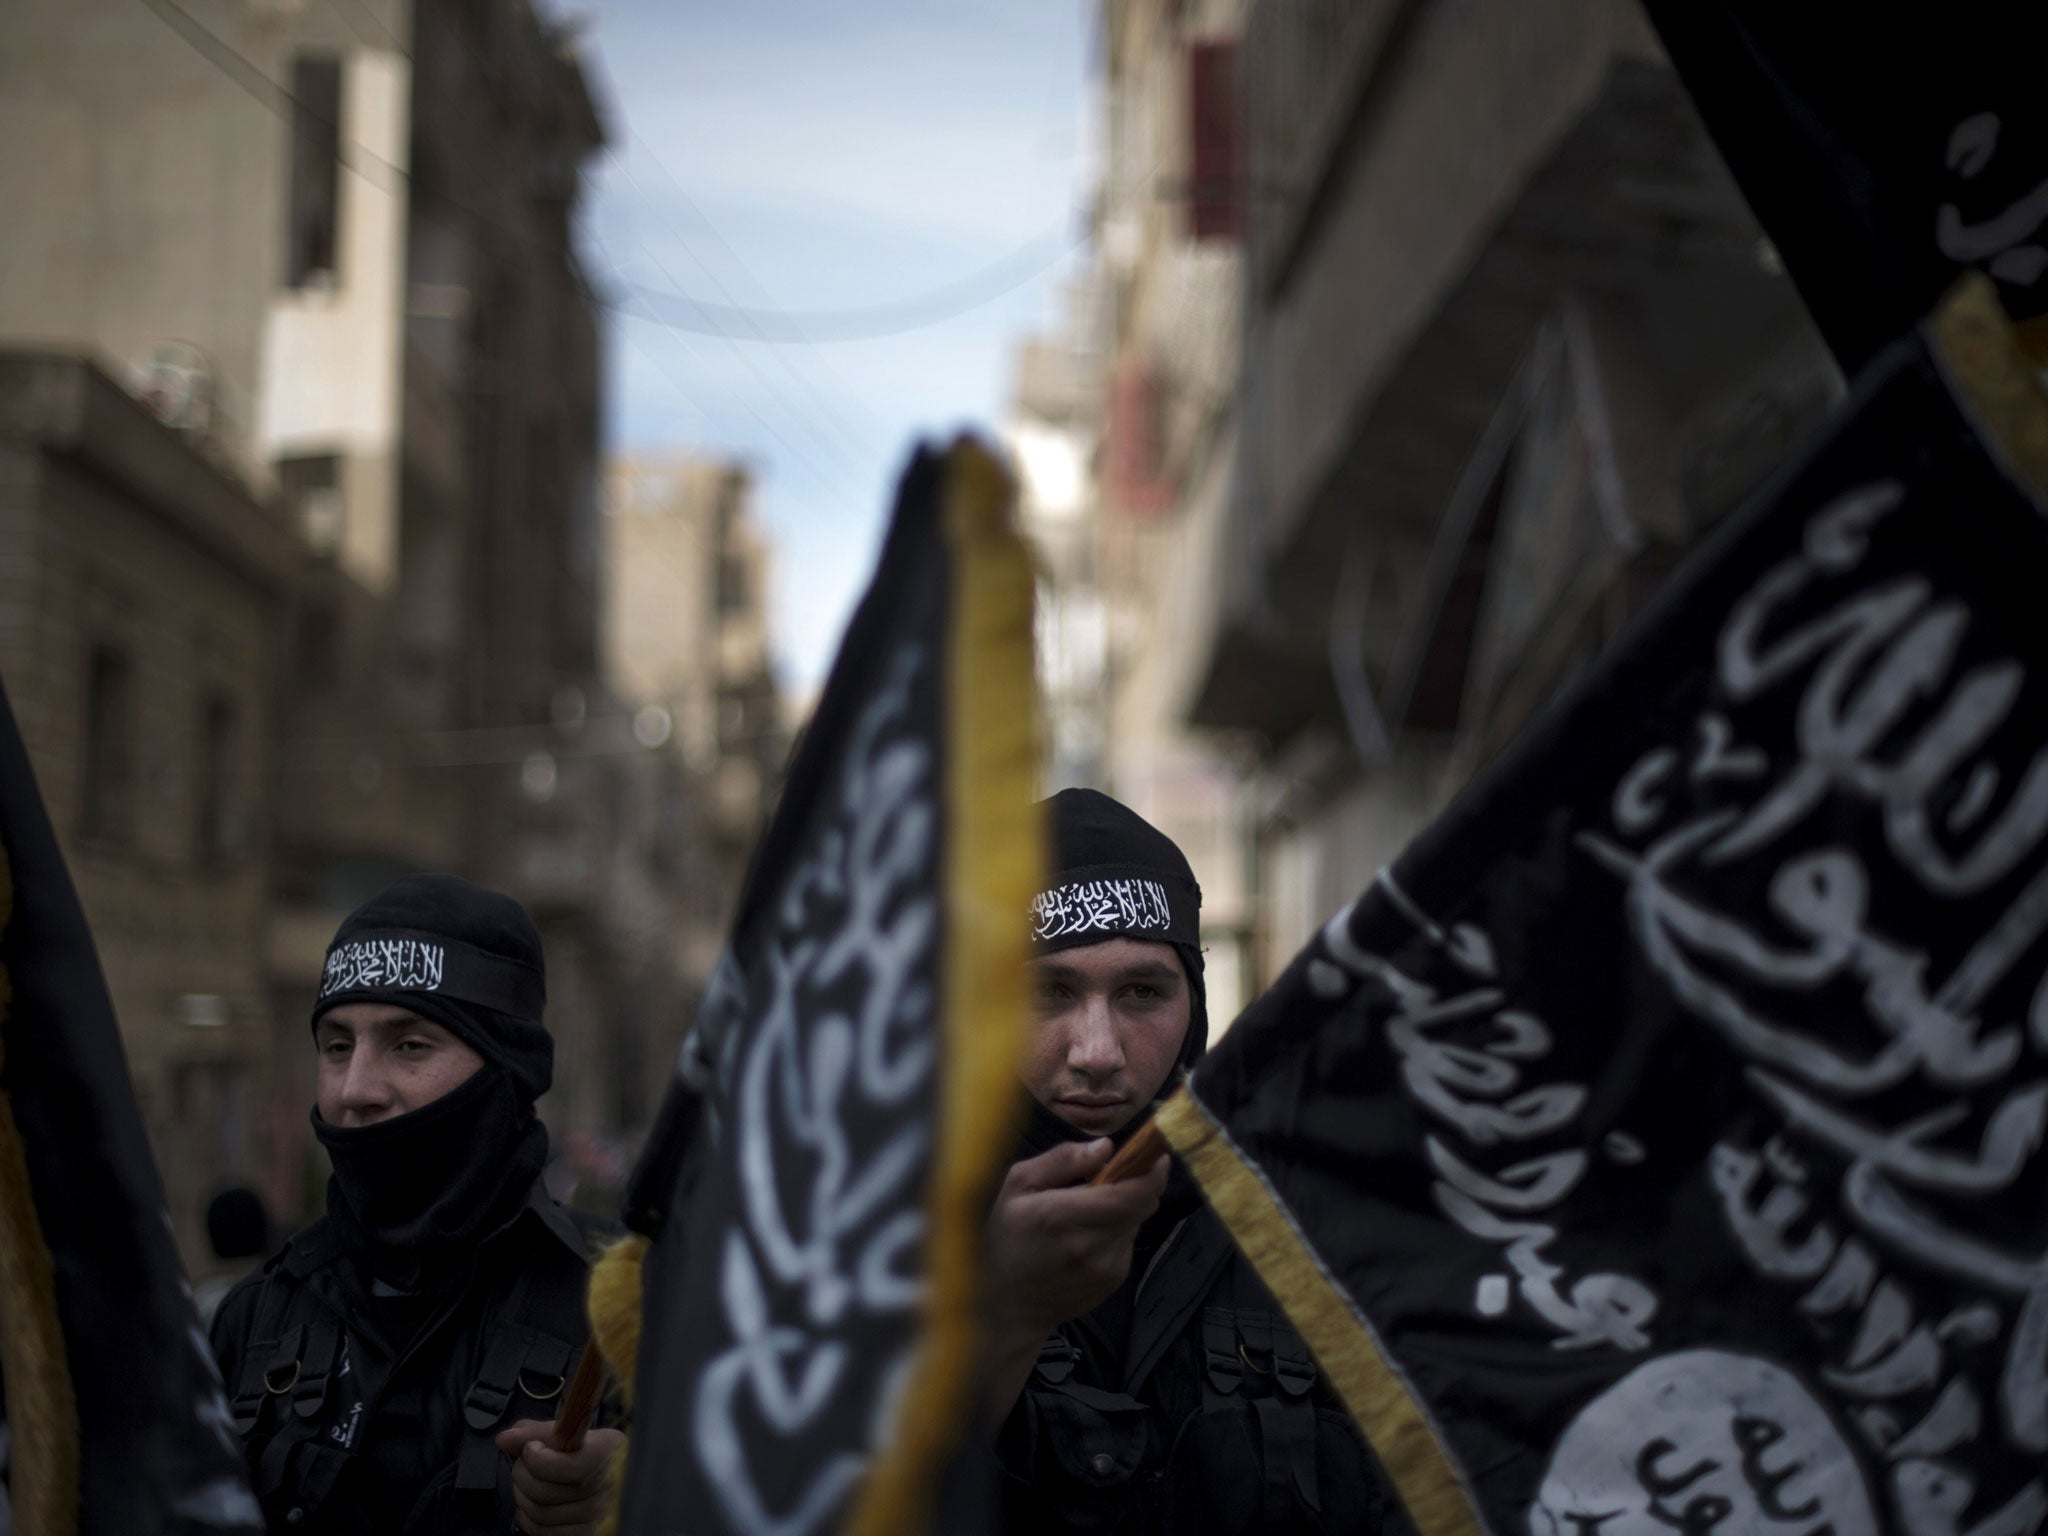 Members of the Islamist Liwa (brigade) Hamzah hold flags of Jabhat al-Nusra at a rally in Deir Ezzor earlier last year